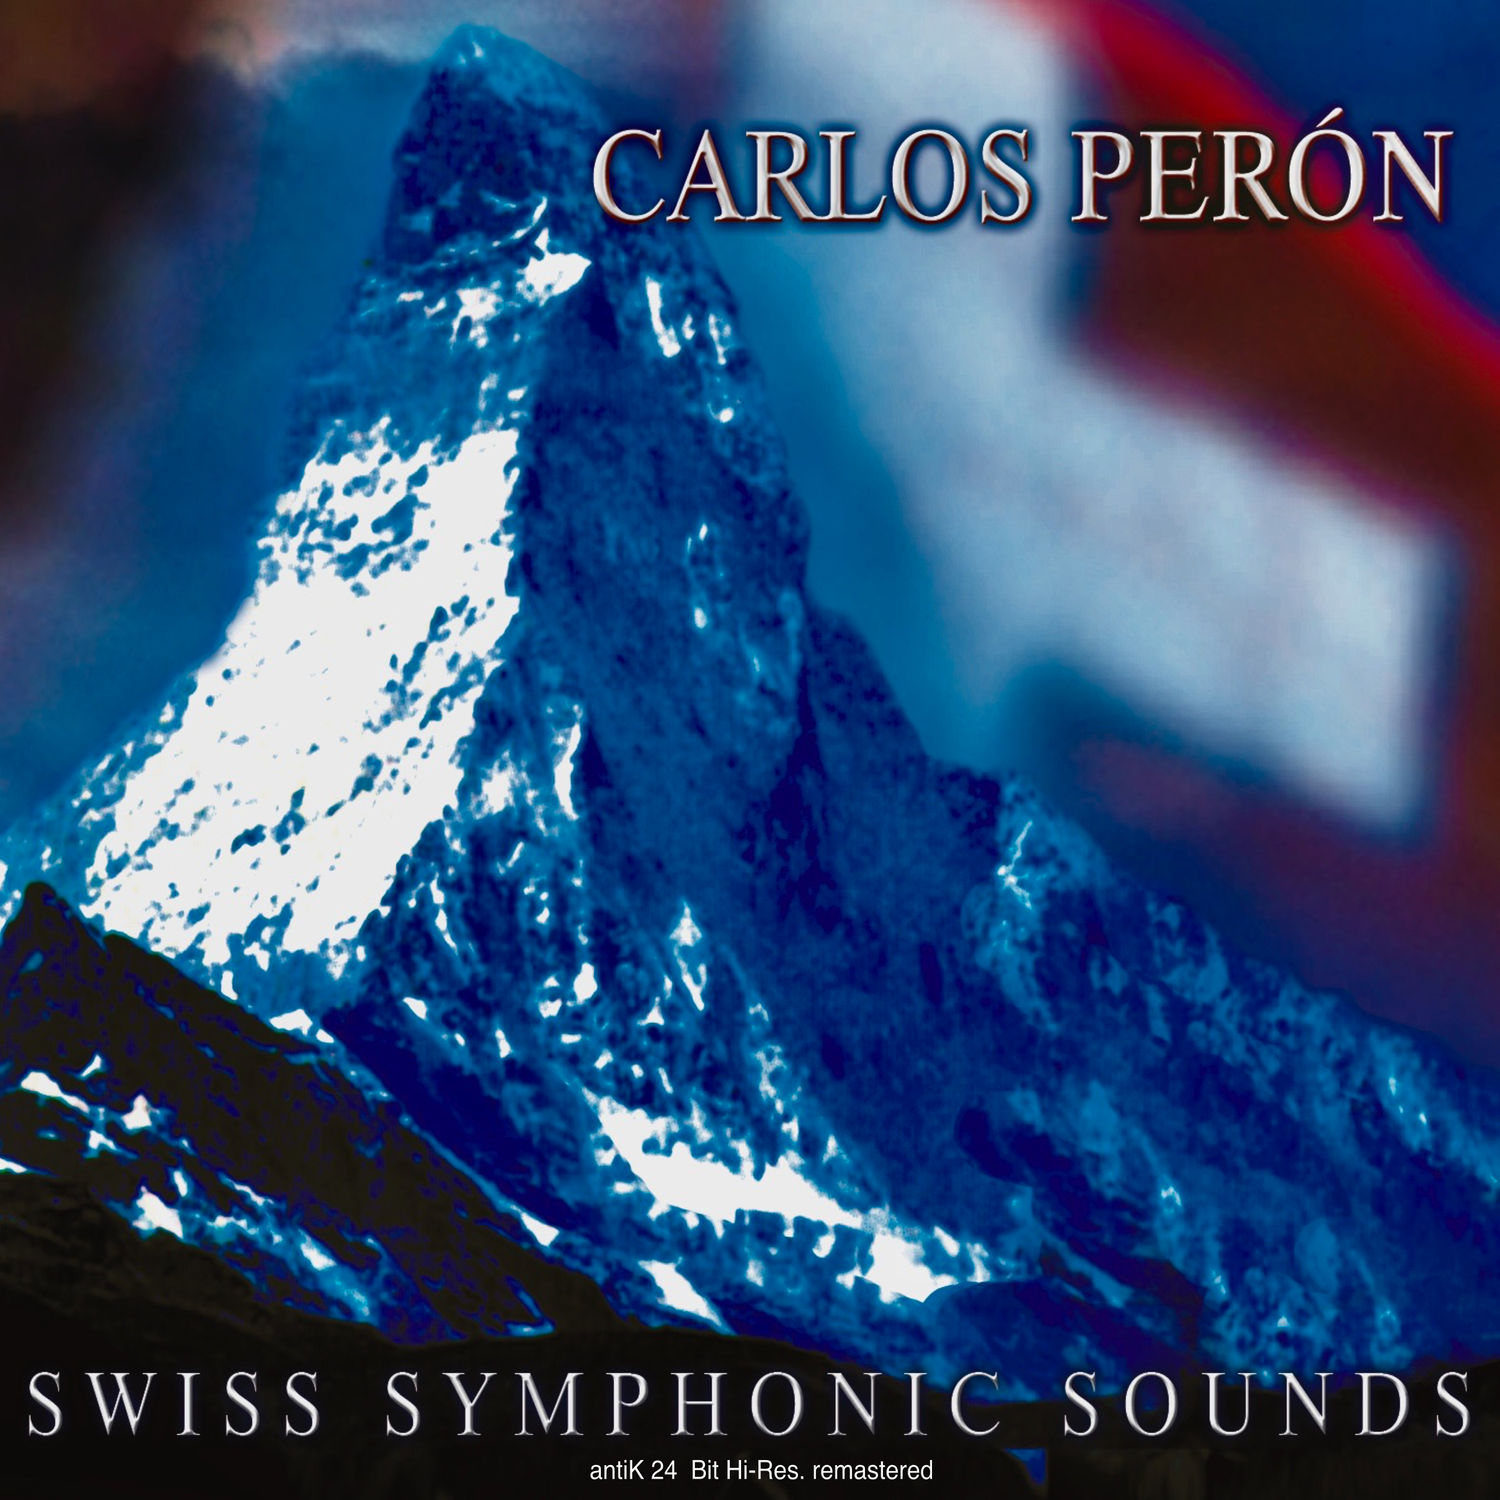 Carlos Peron – Swiss Symphonic Sounds [Remastered] (2020) [FLAC 24bit/44,1kHz]